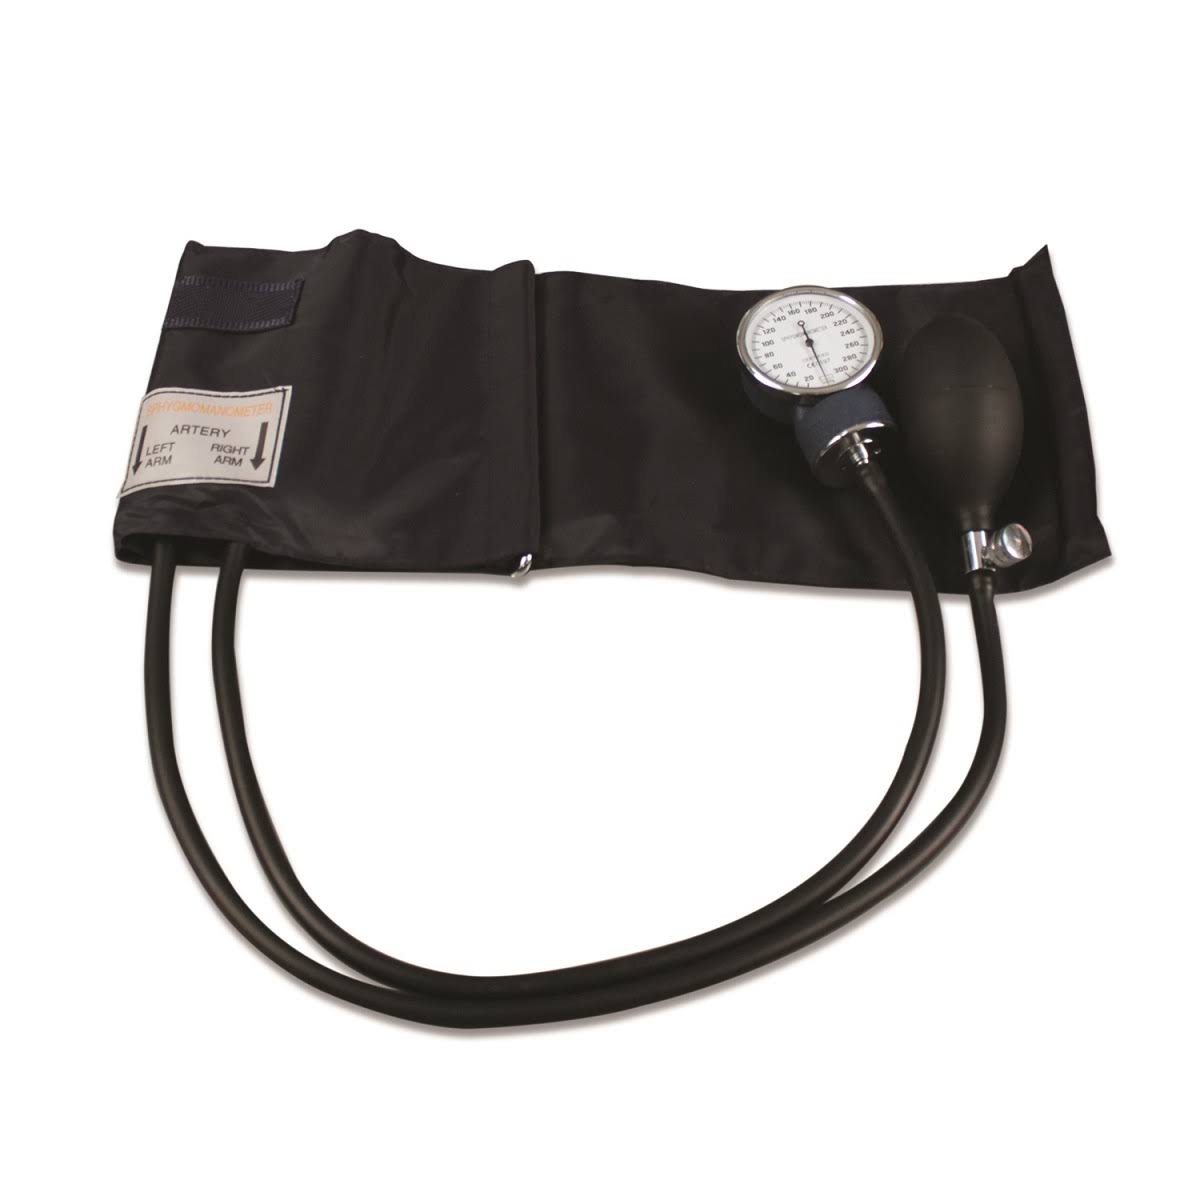 Dynarex Blood Pressure Cuff Sphygmomanometer Kit - With Zippered Case